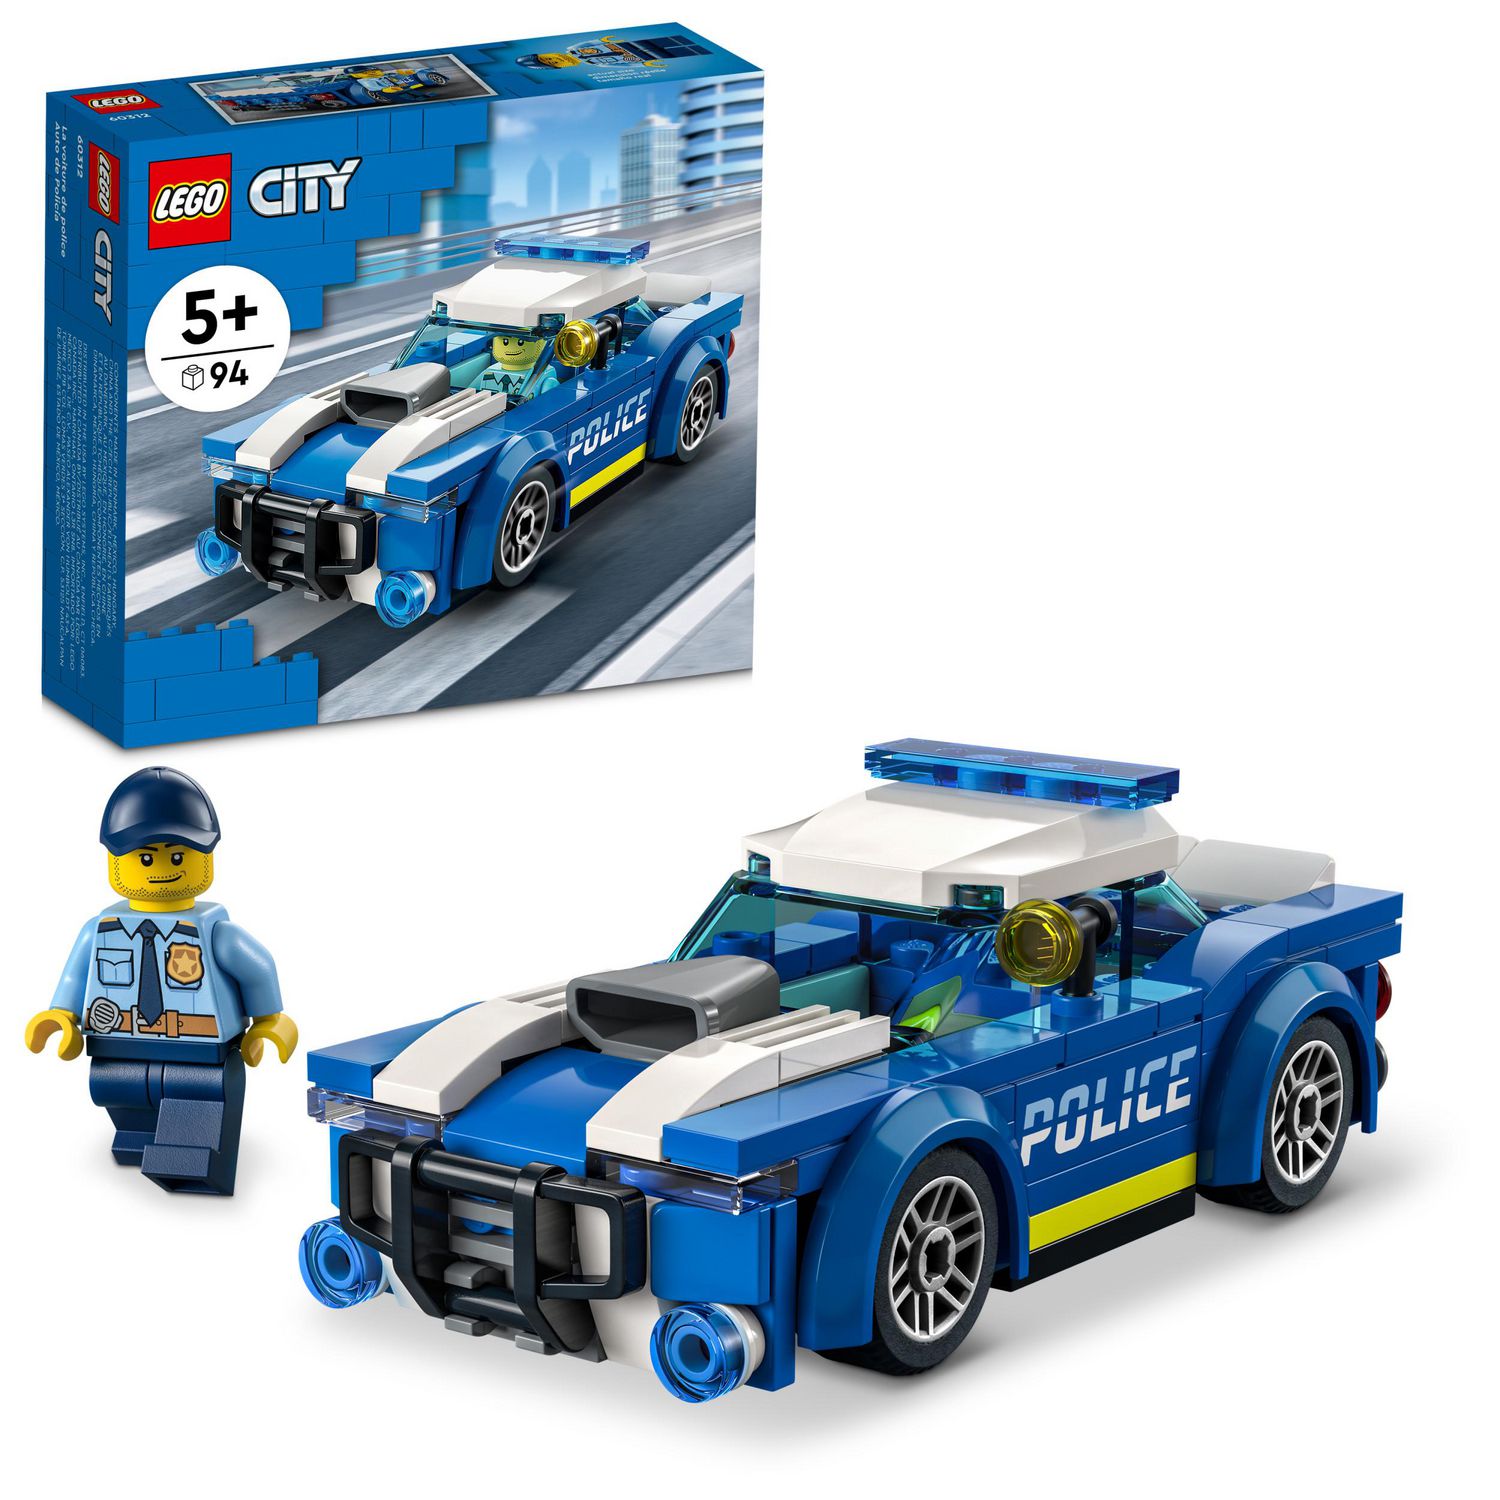 hold Smøre Vær tilfreds LEGO City Police Car 60312 Toy Building Kit (94 Pieces) | Walmart Canada